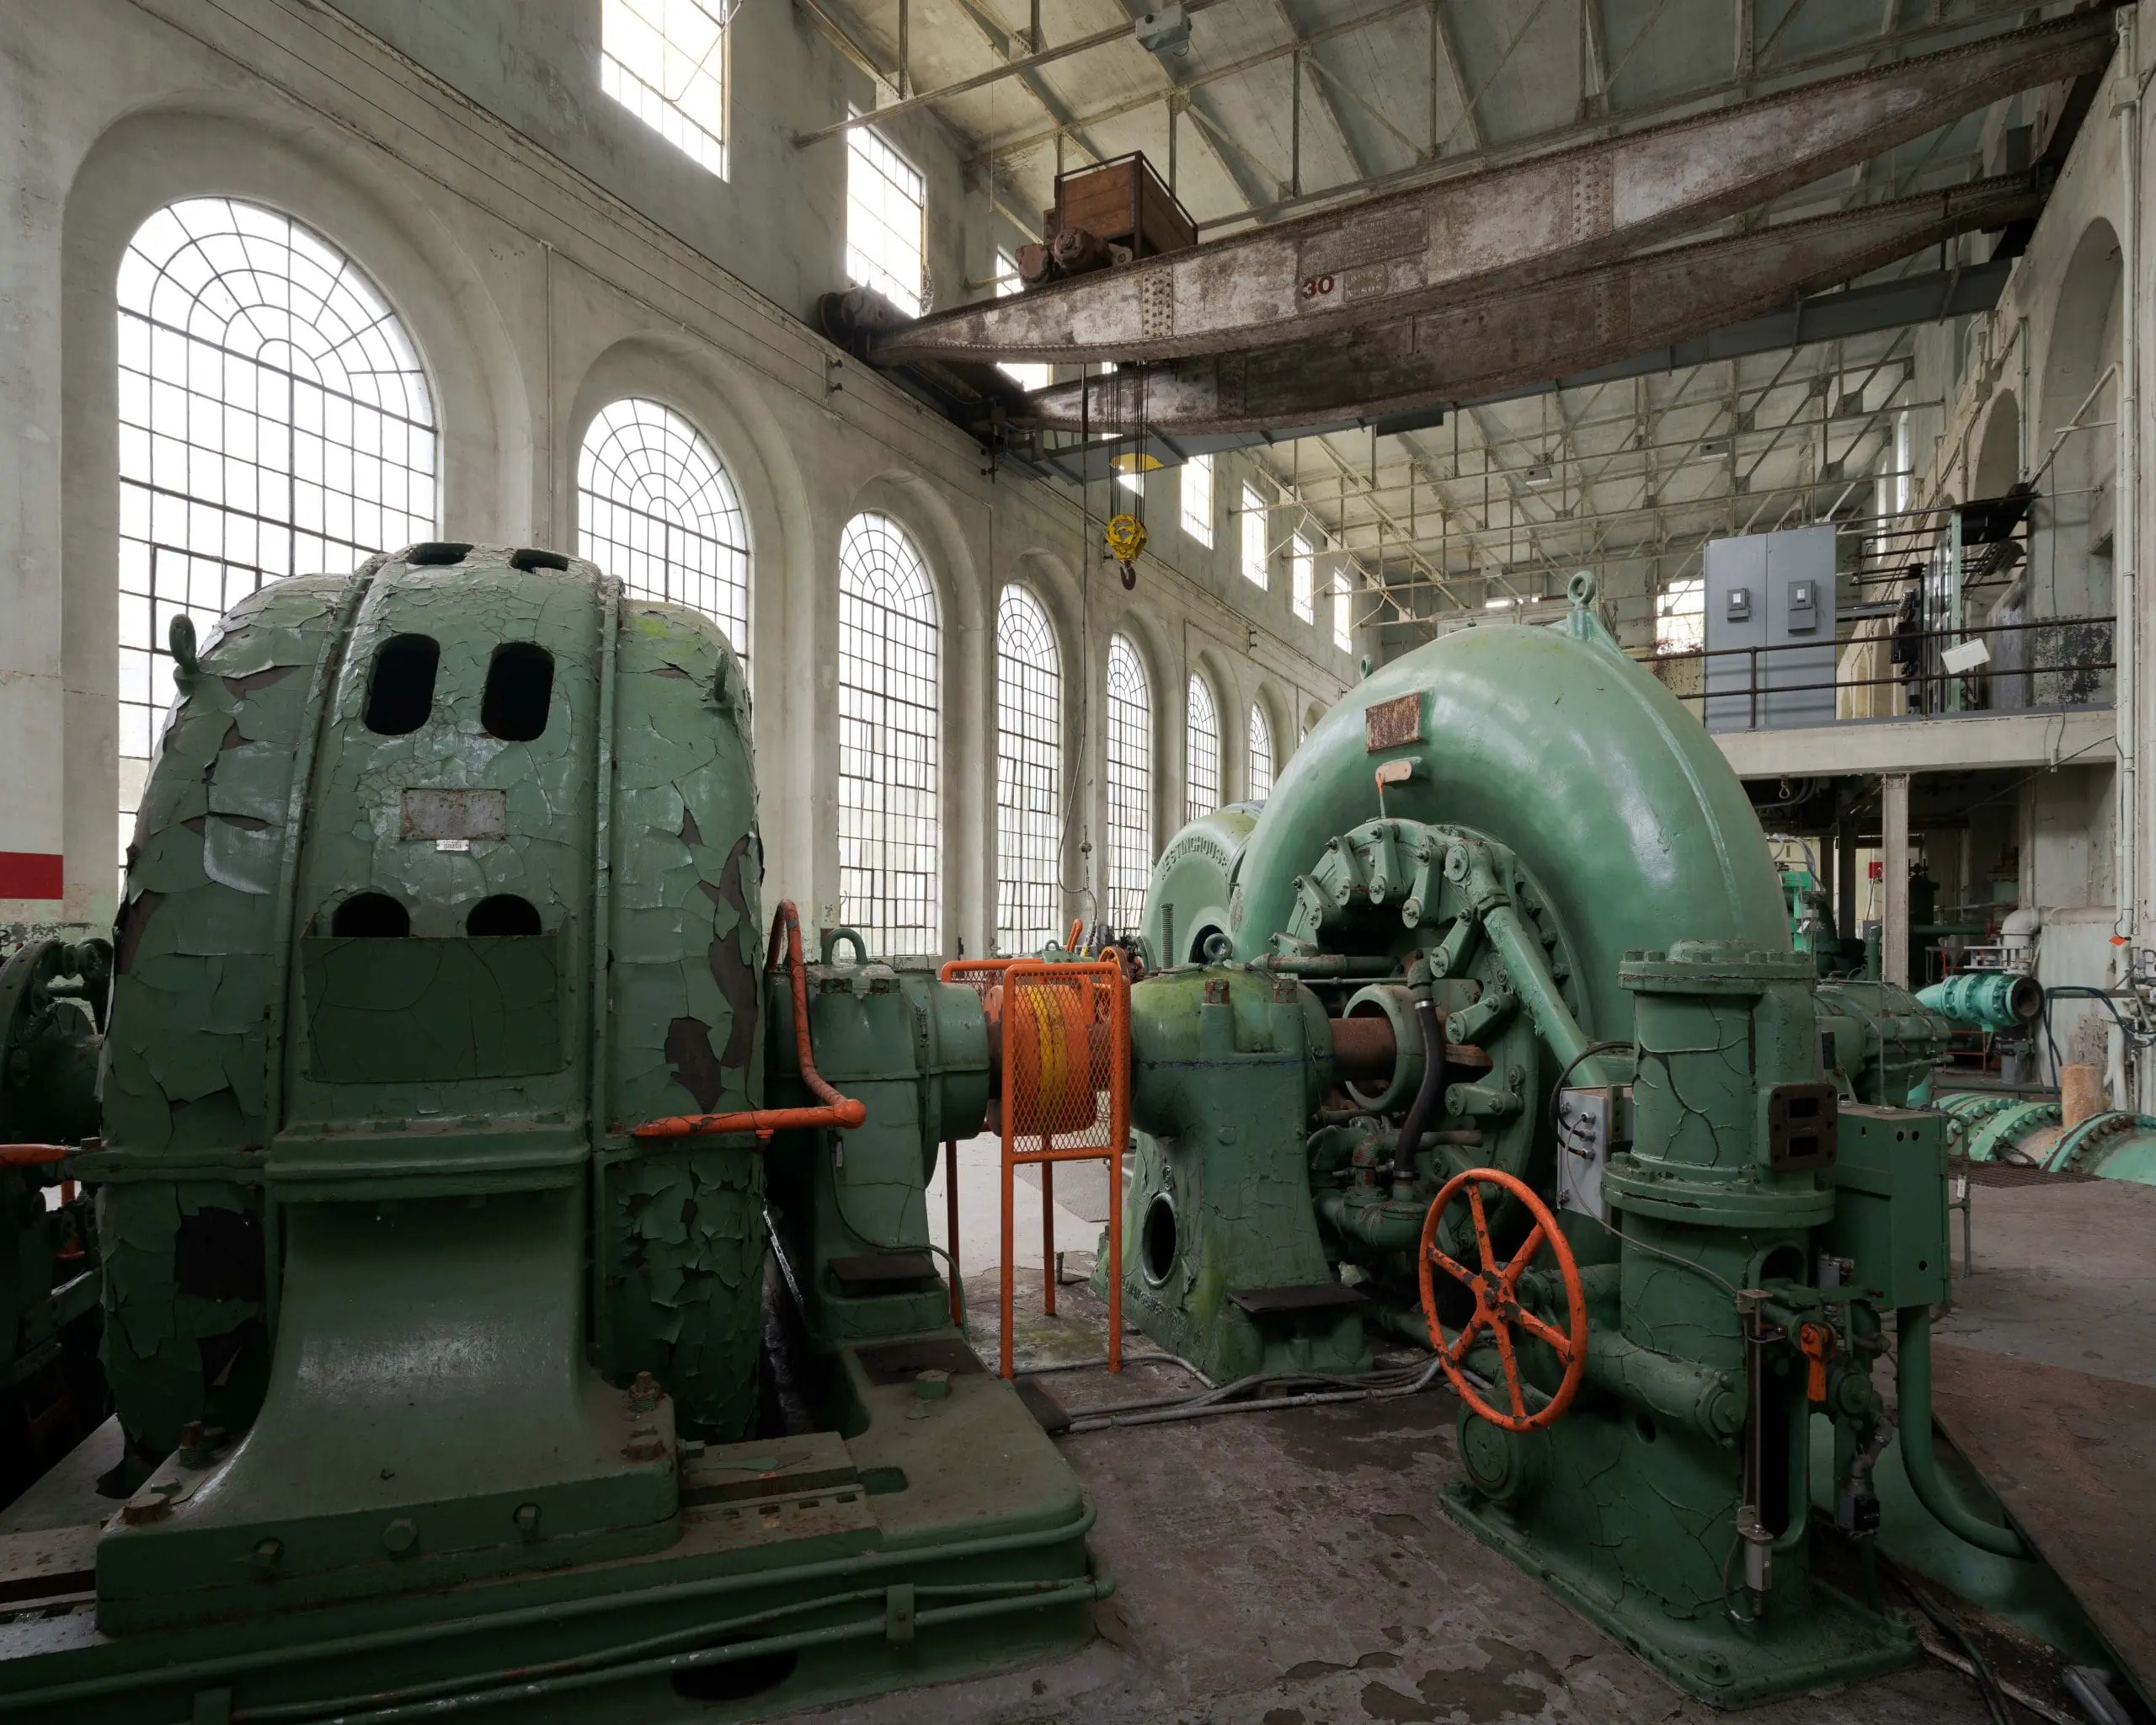 Westinghouse Generator